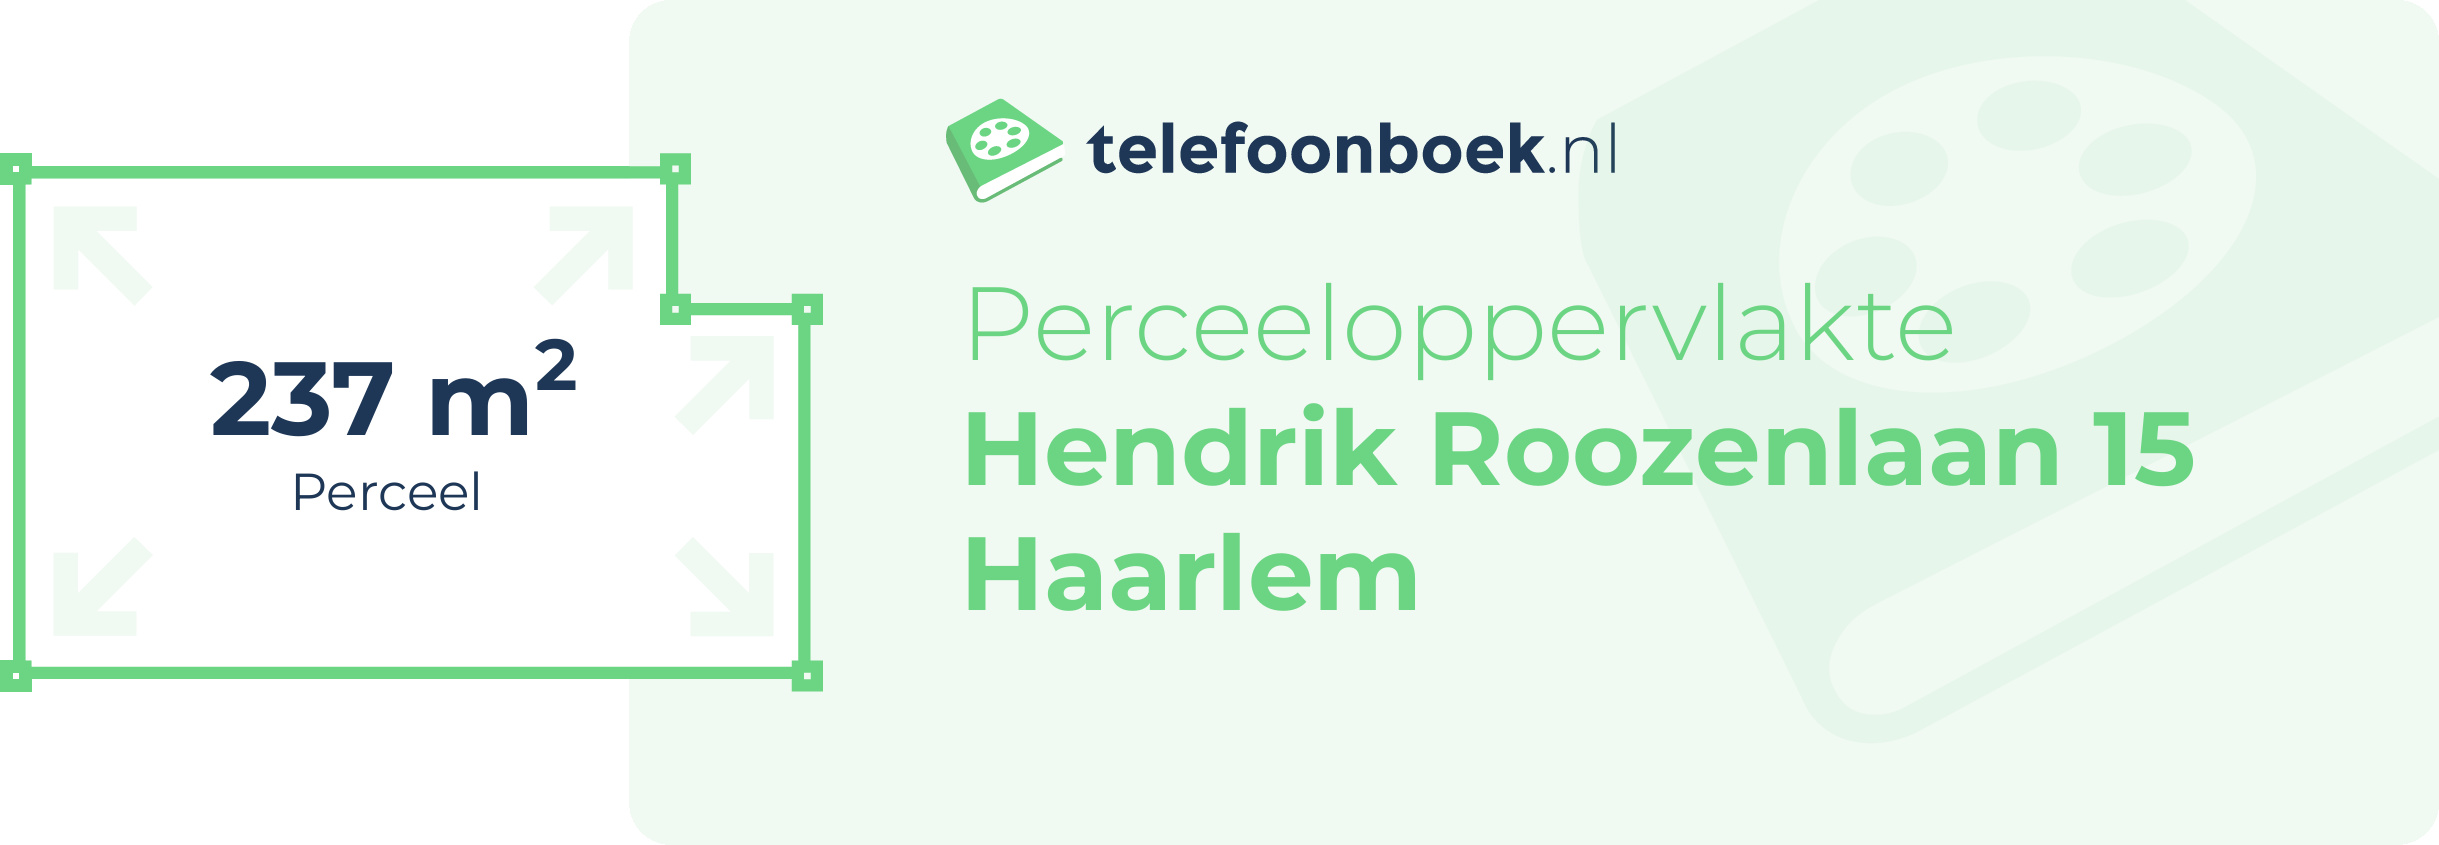 Perceeloppervlakte Hendrik Roozenlaan 15 Haarlem